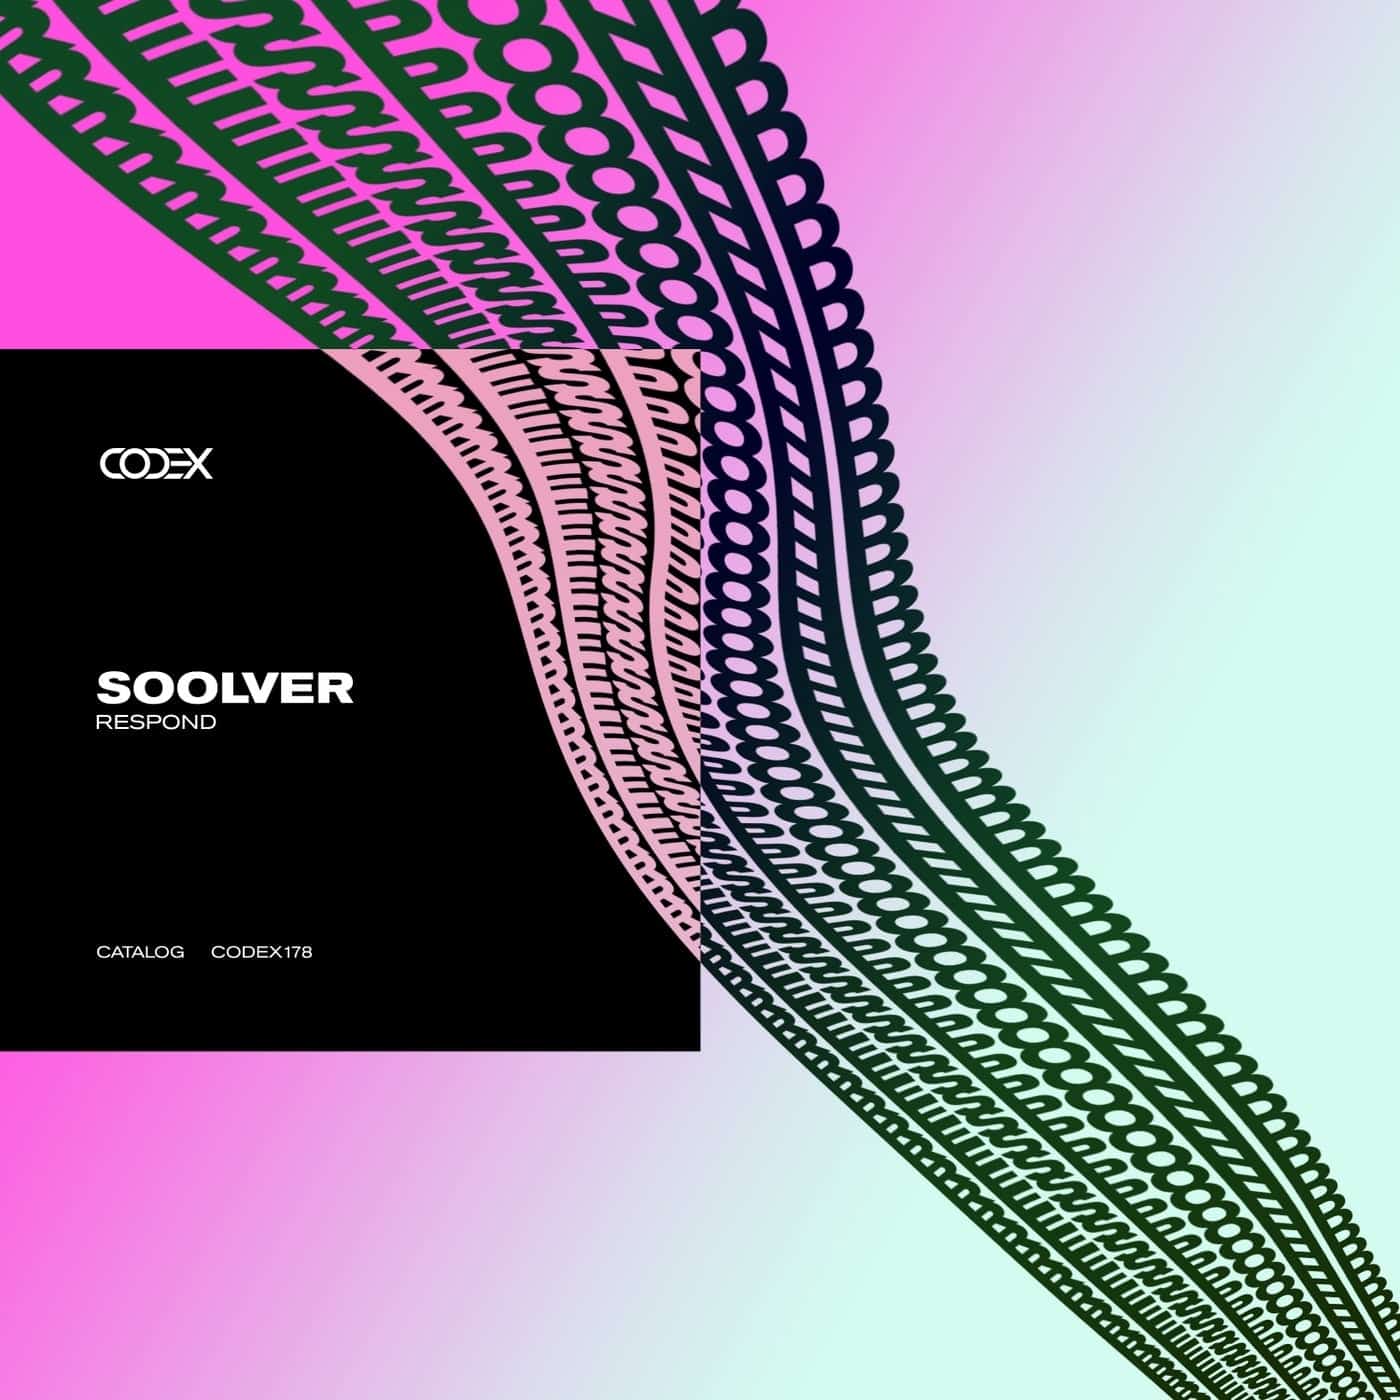 Download Soolver - Respond on Electrobuzz